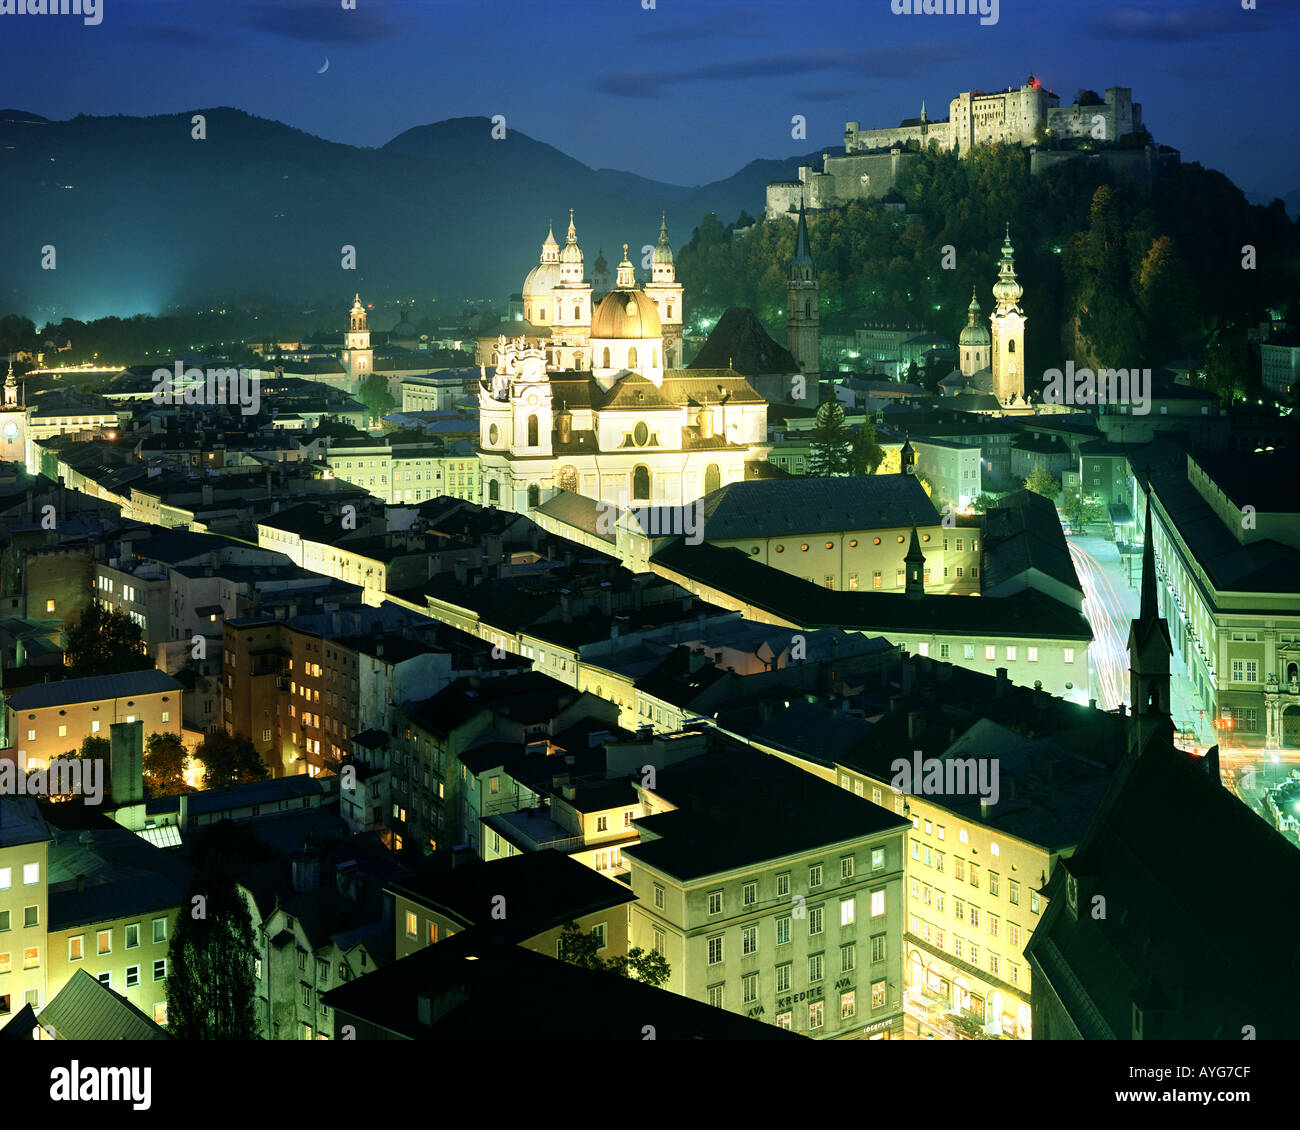 A - Salisburgo: Città e Festung Hohensalzburg (Castello) di notte Foto Stock